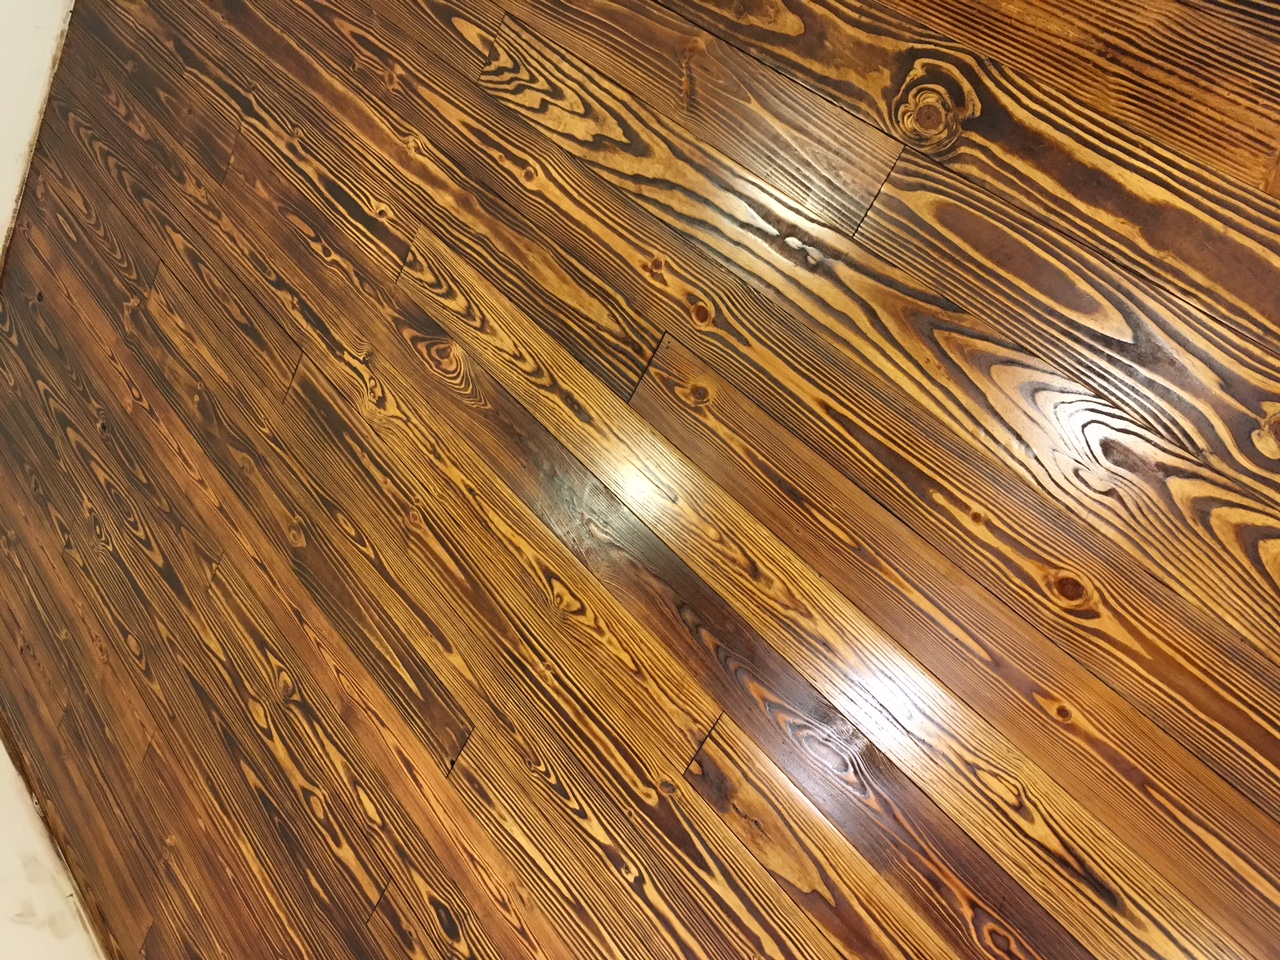 Select Knotty Pine Flooring Heart